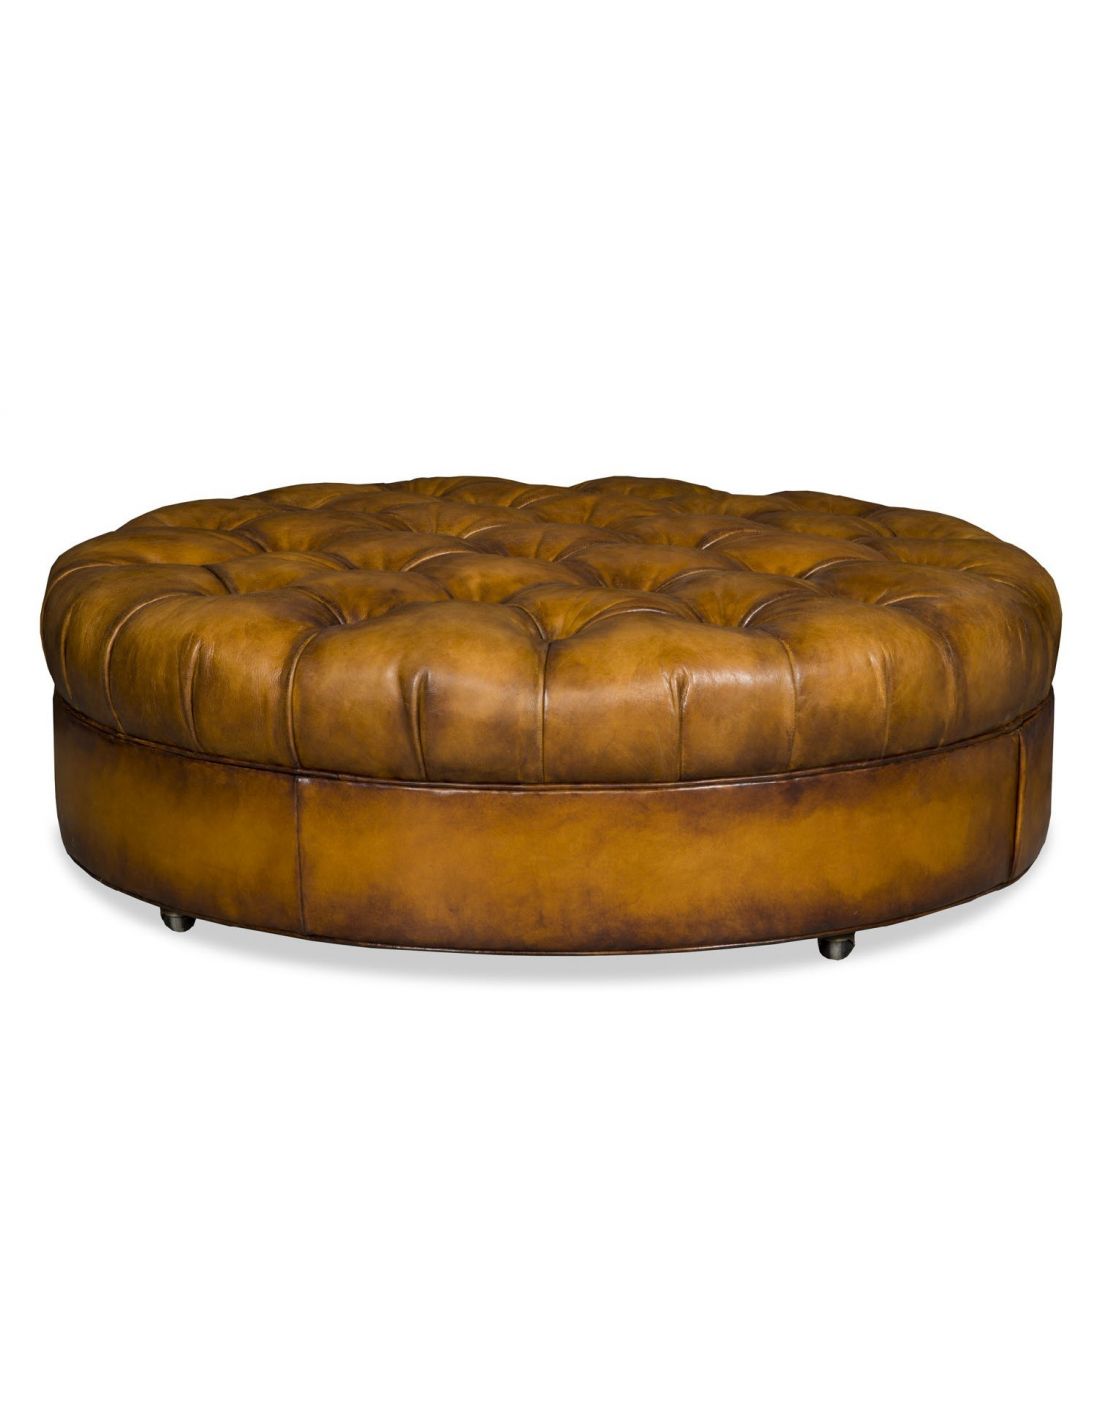 Round Leather Tufted Ottoman, Circular Leather Ottoman